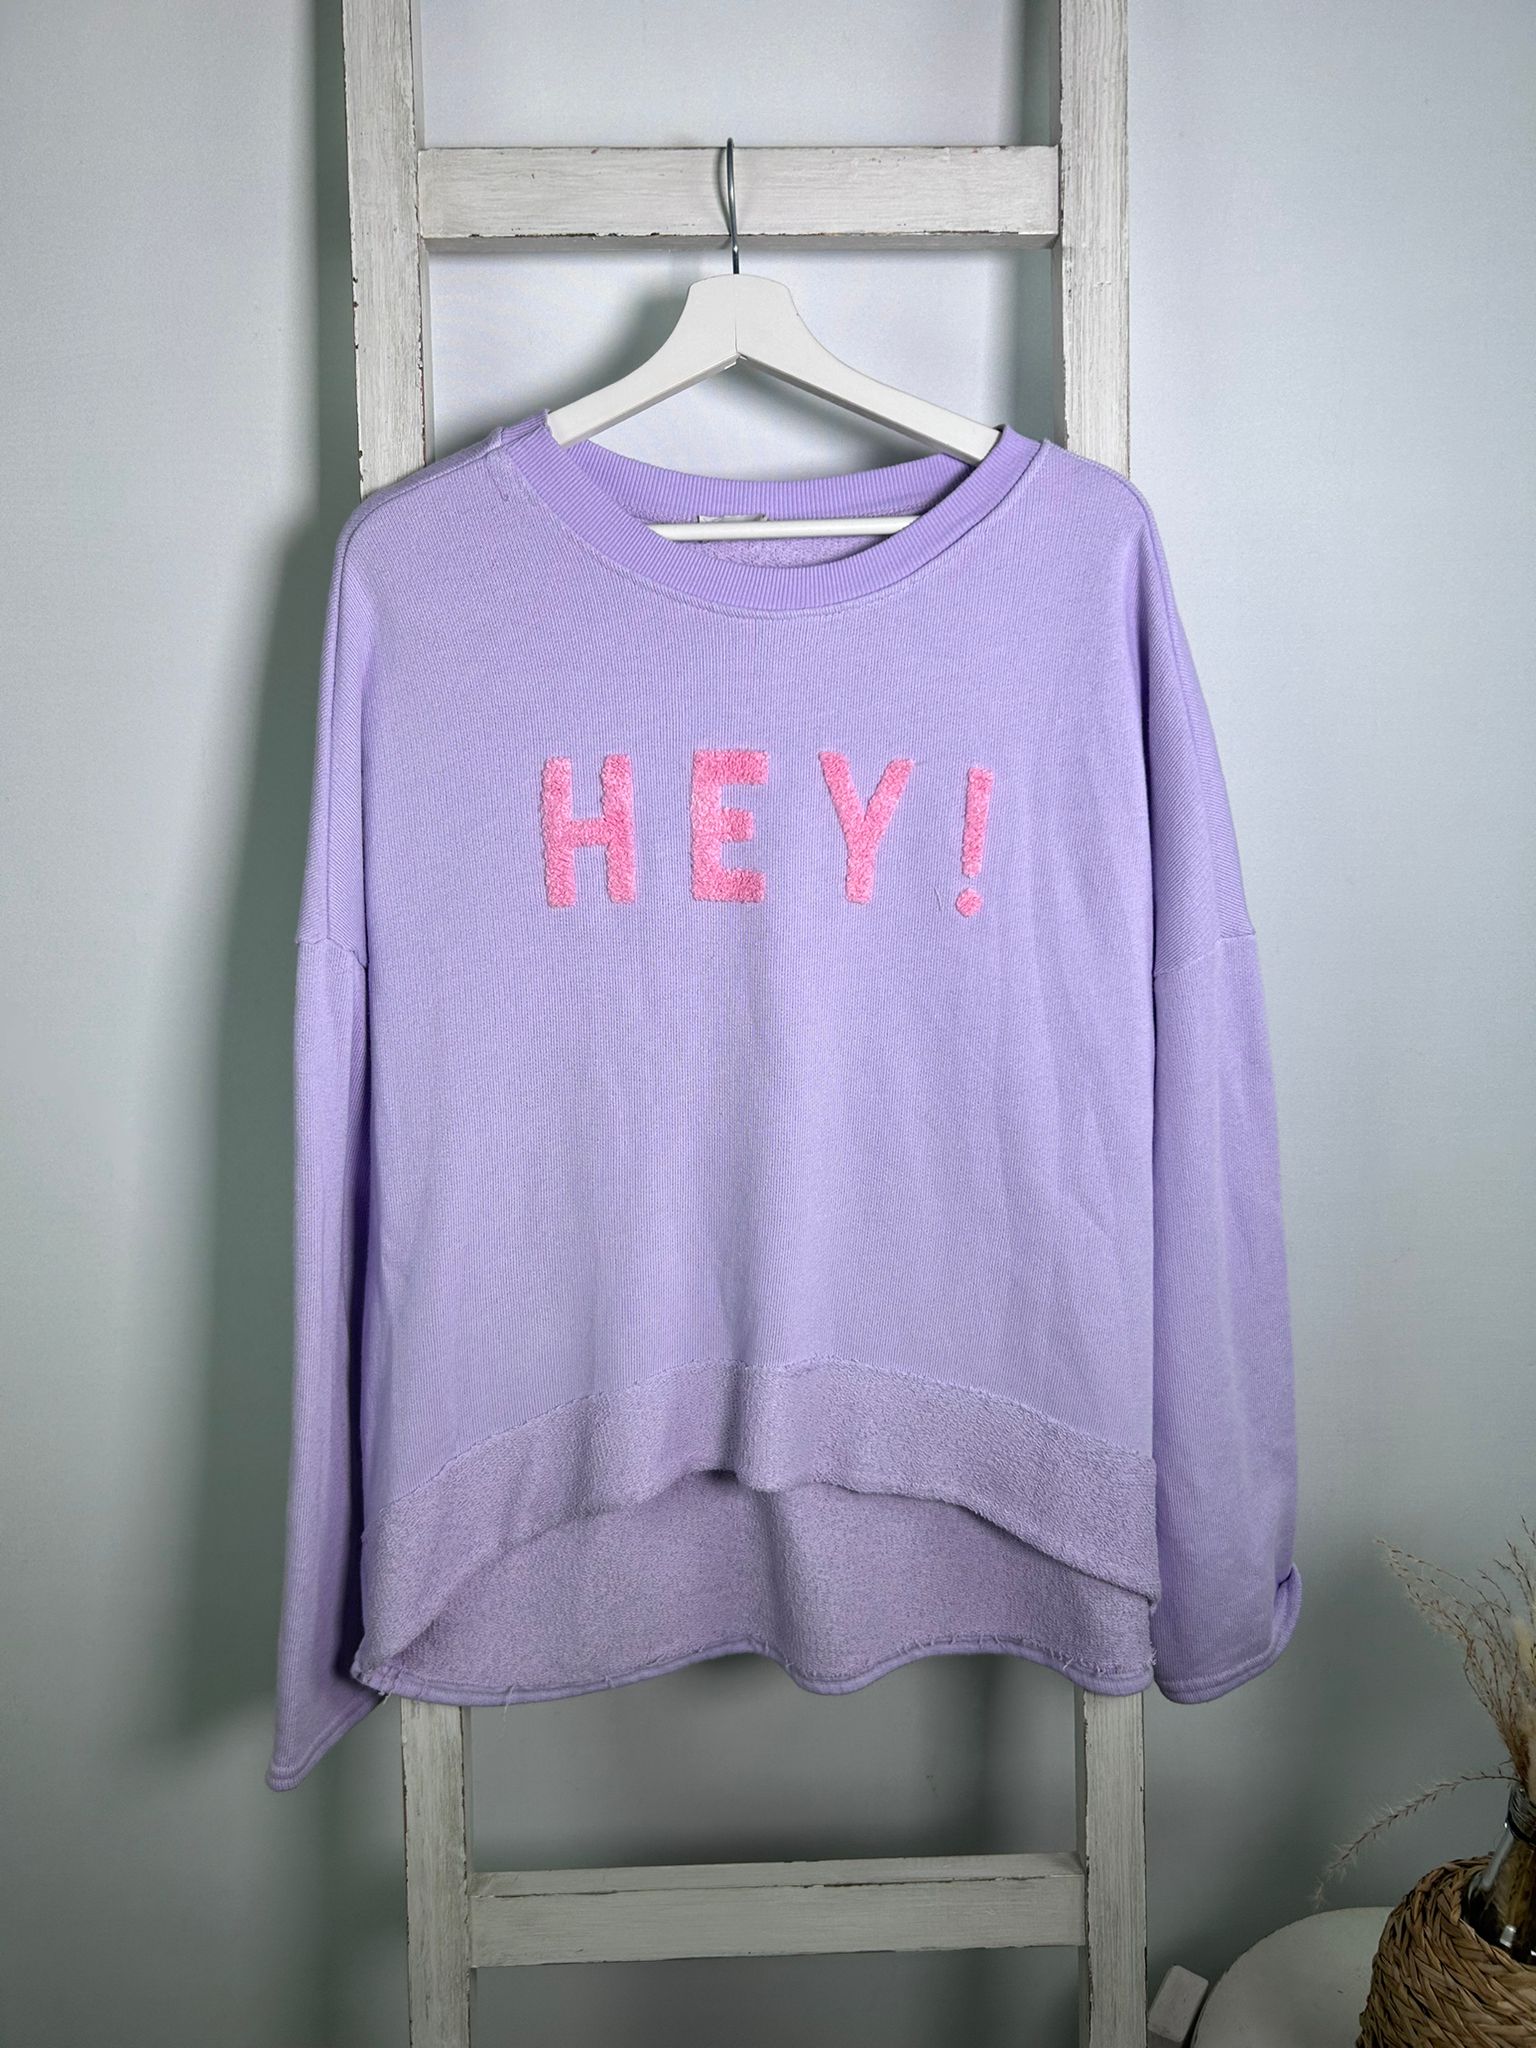 Sweater mit Flokati “HEY!” Druck